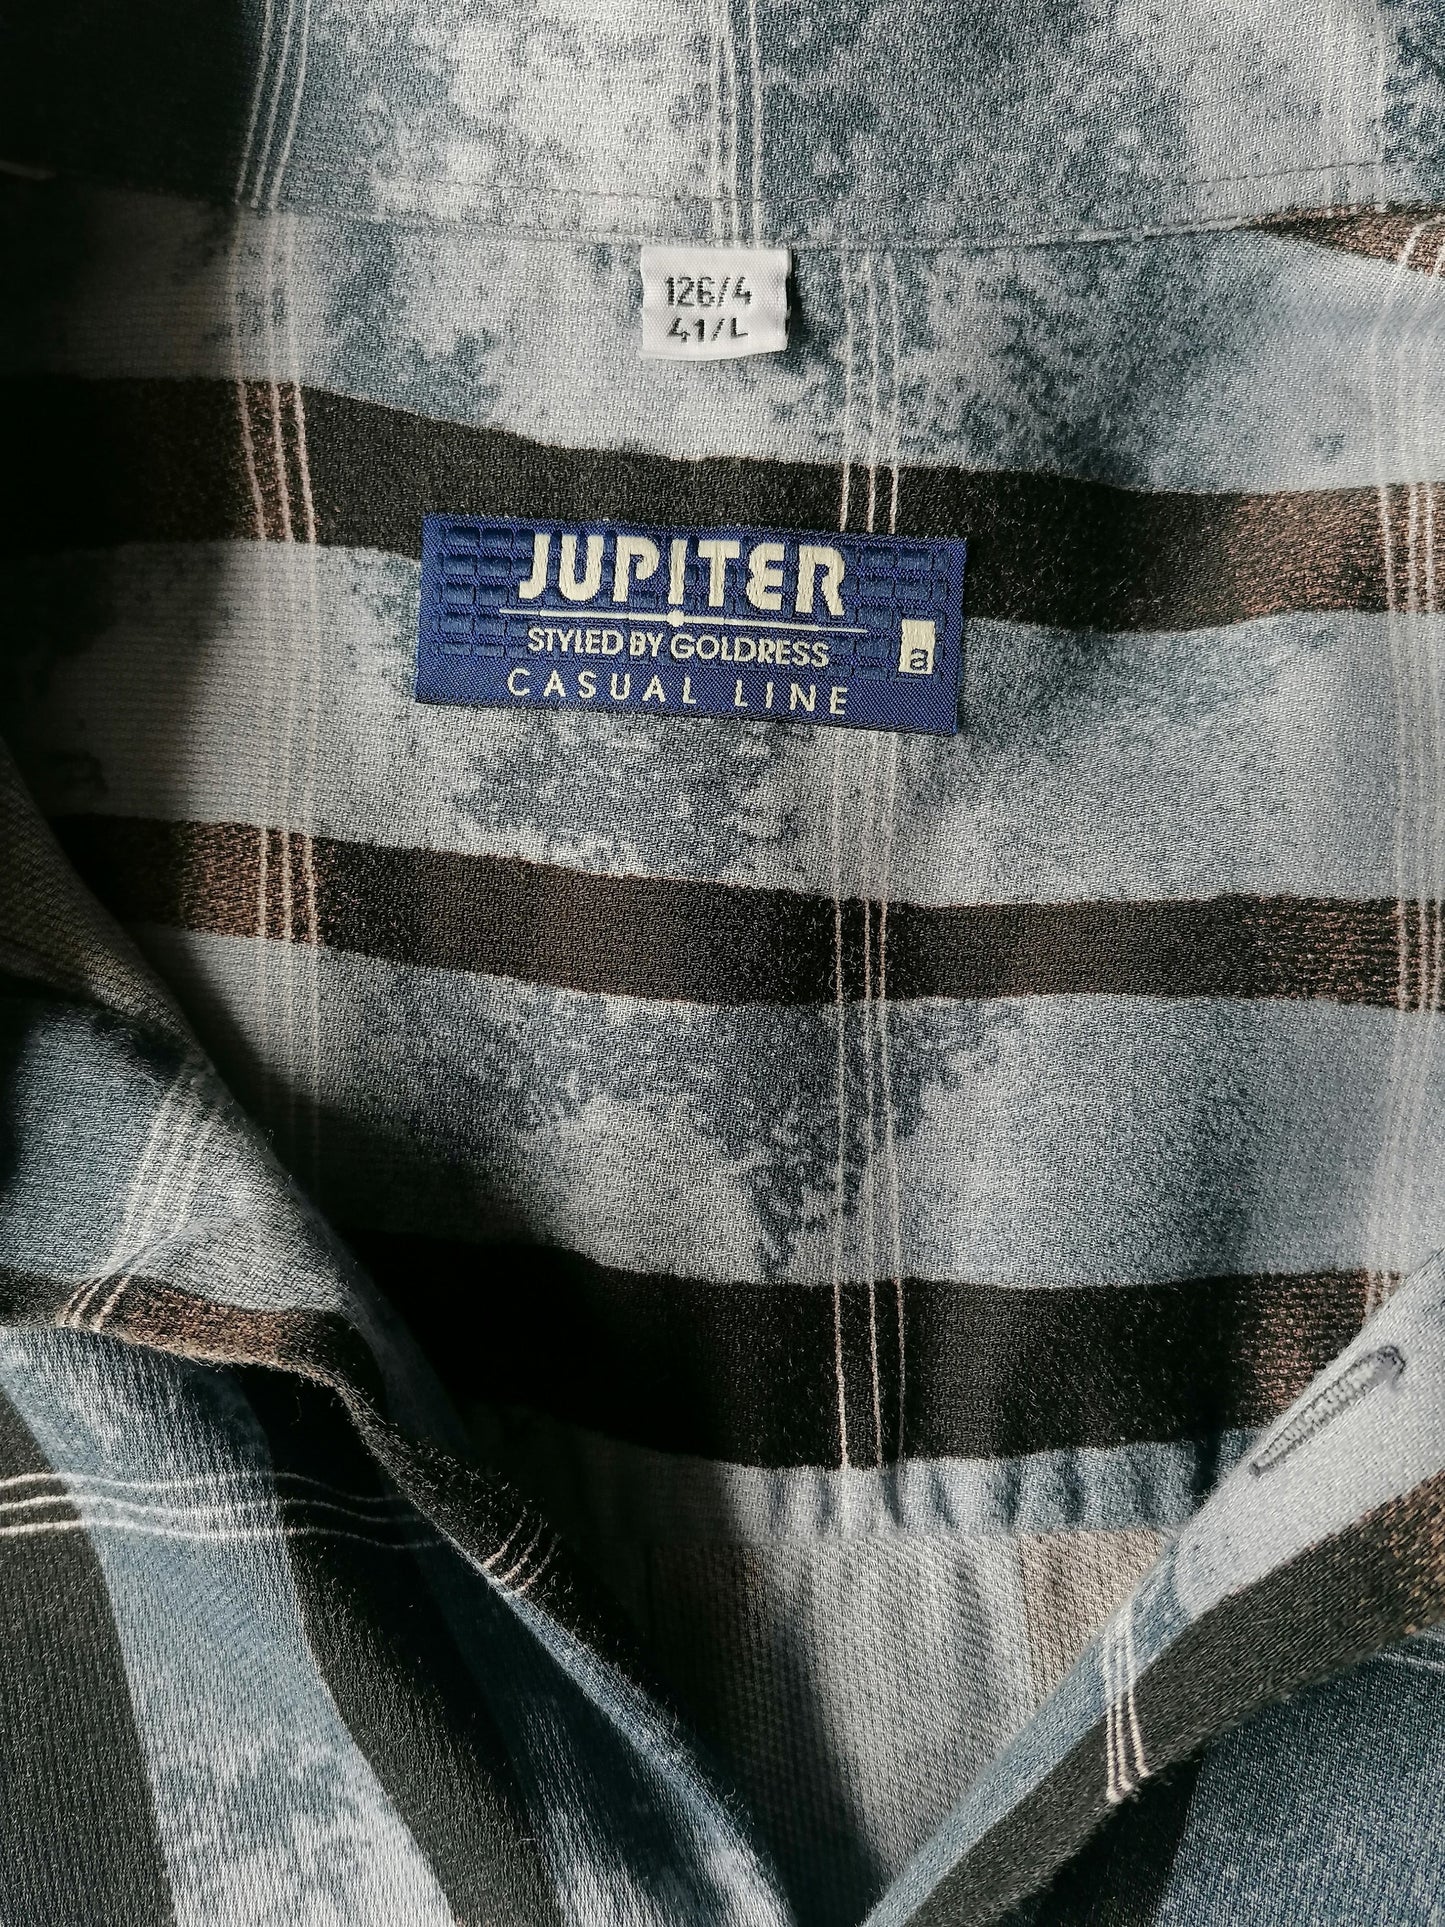 Vintage Jupiter 90 Camiseta Camiseta corta. Impresión negra azul. Tamaño L. Modelo largo.